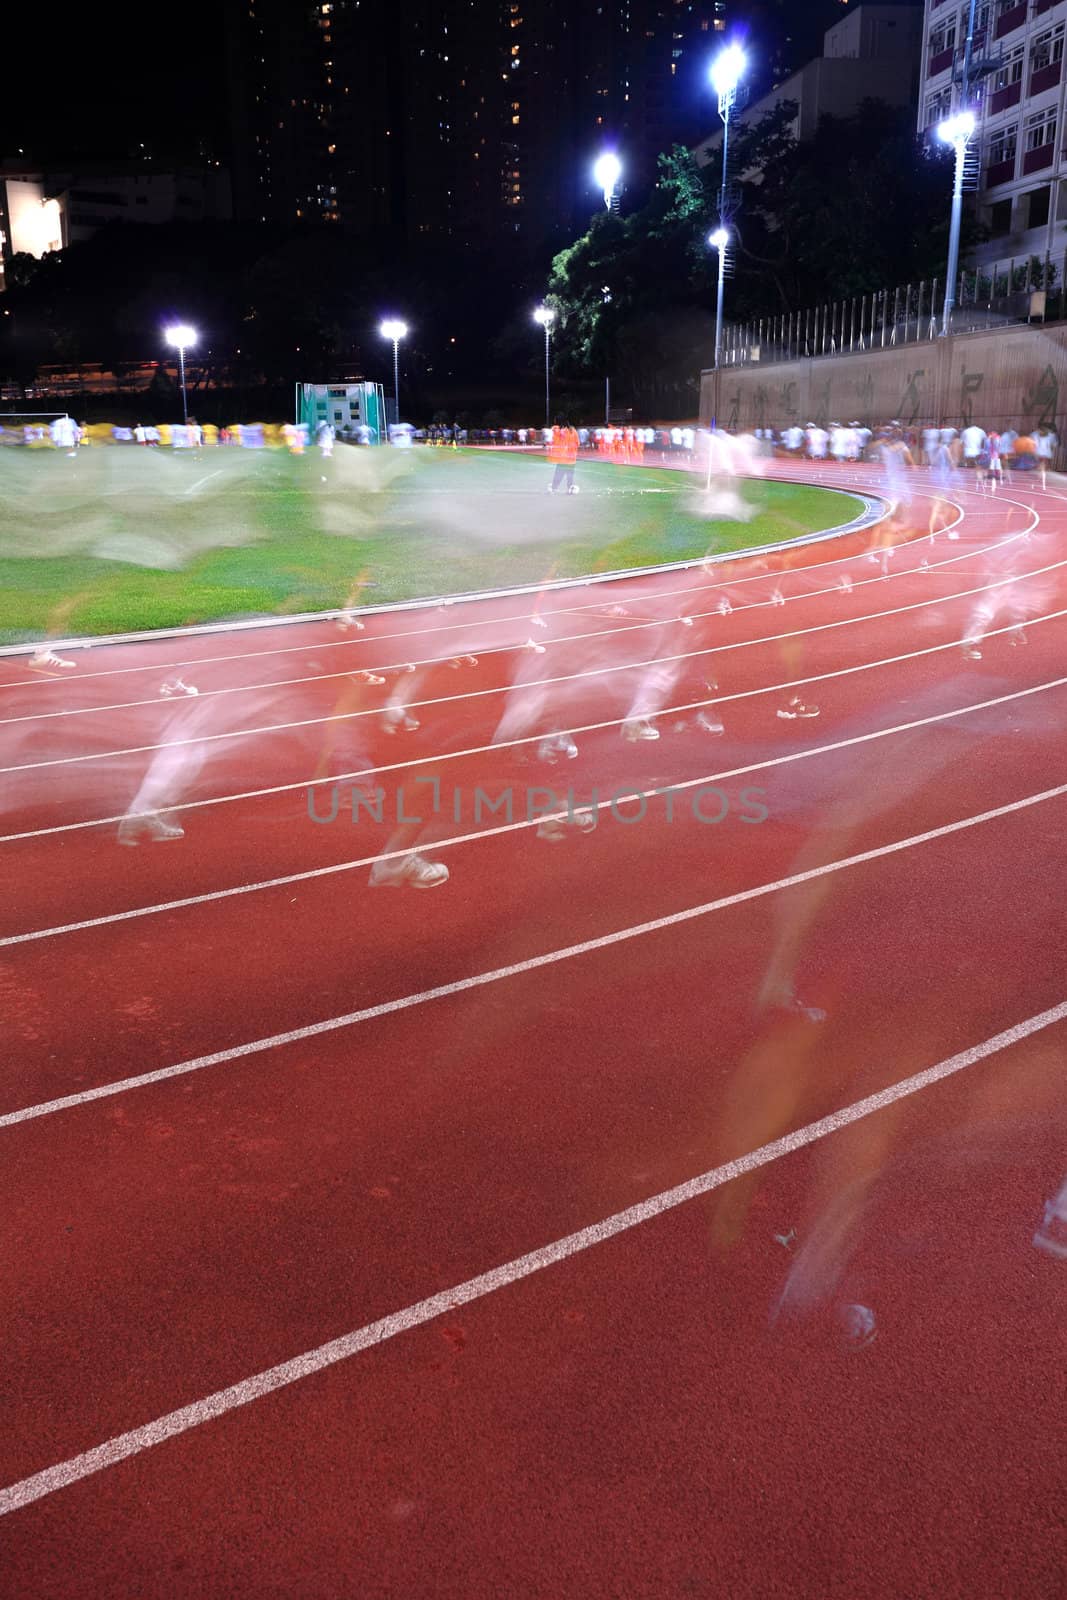 Running tracks in a stadium by leungchopan